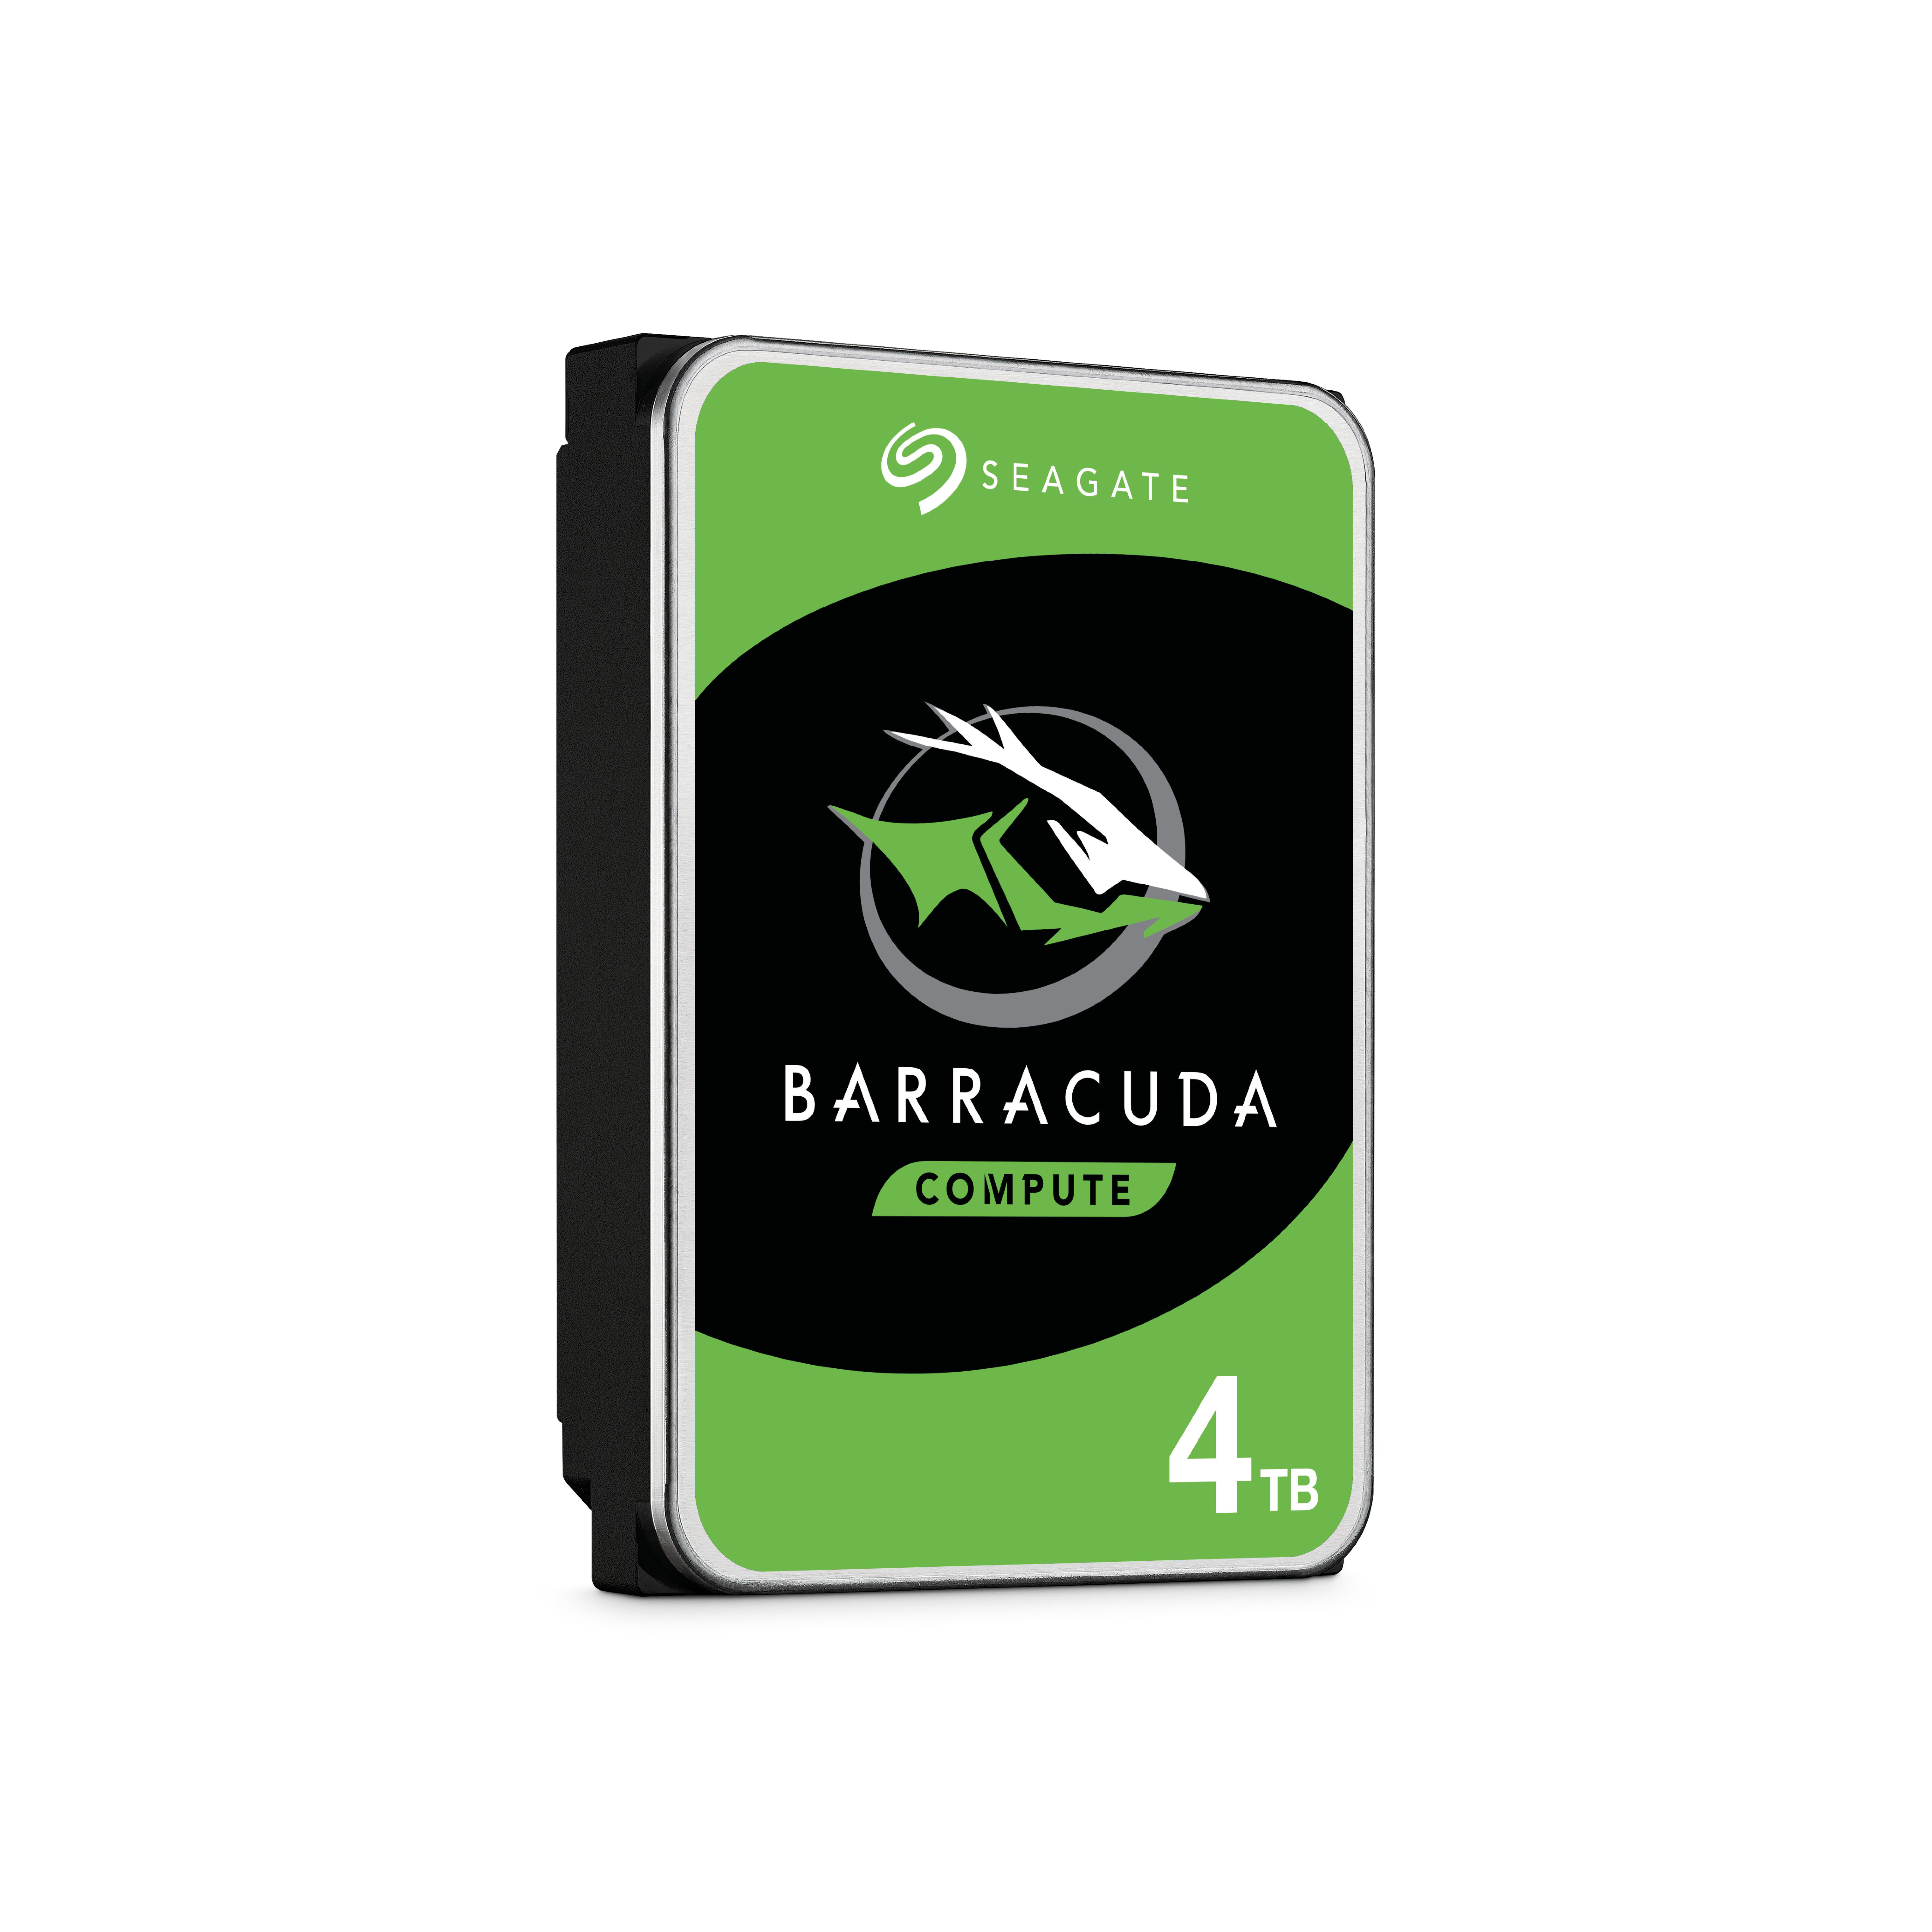 SEAGATE BarraCuda Festplatte Retail, 4 3,5 SATA TB intern 6 Gbps, HDD Zoll